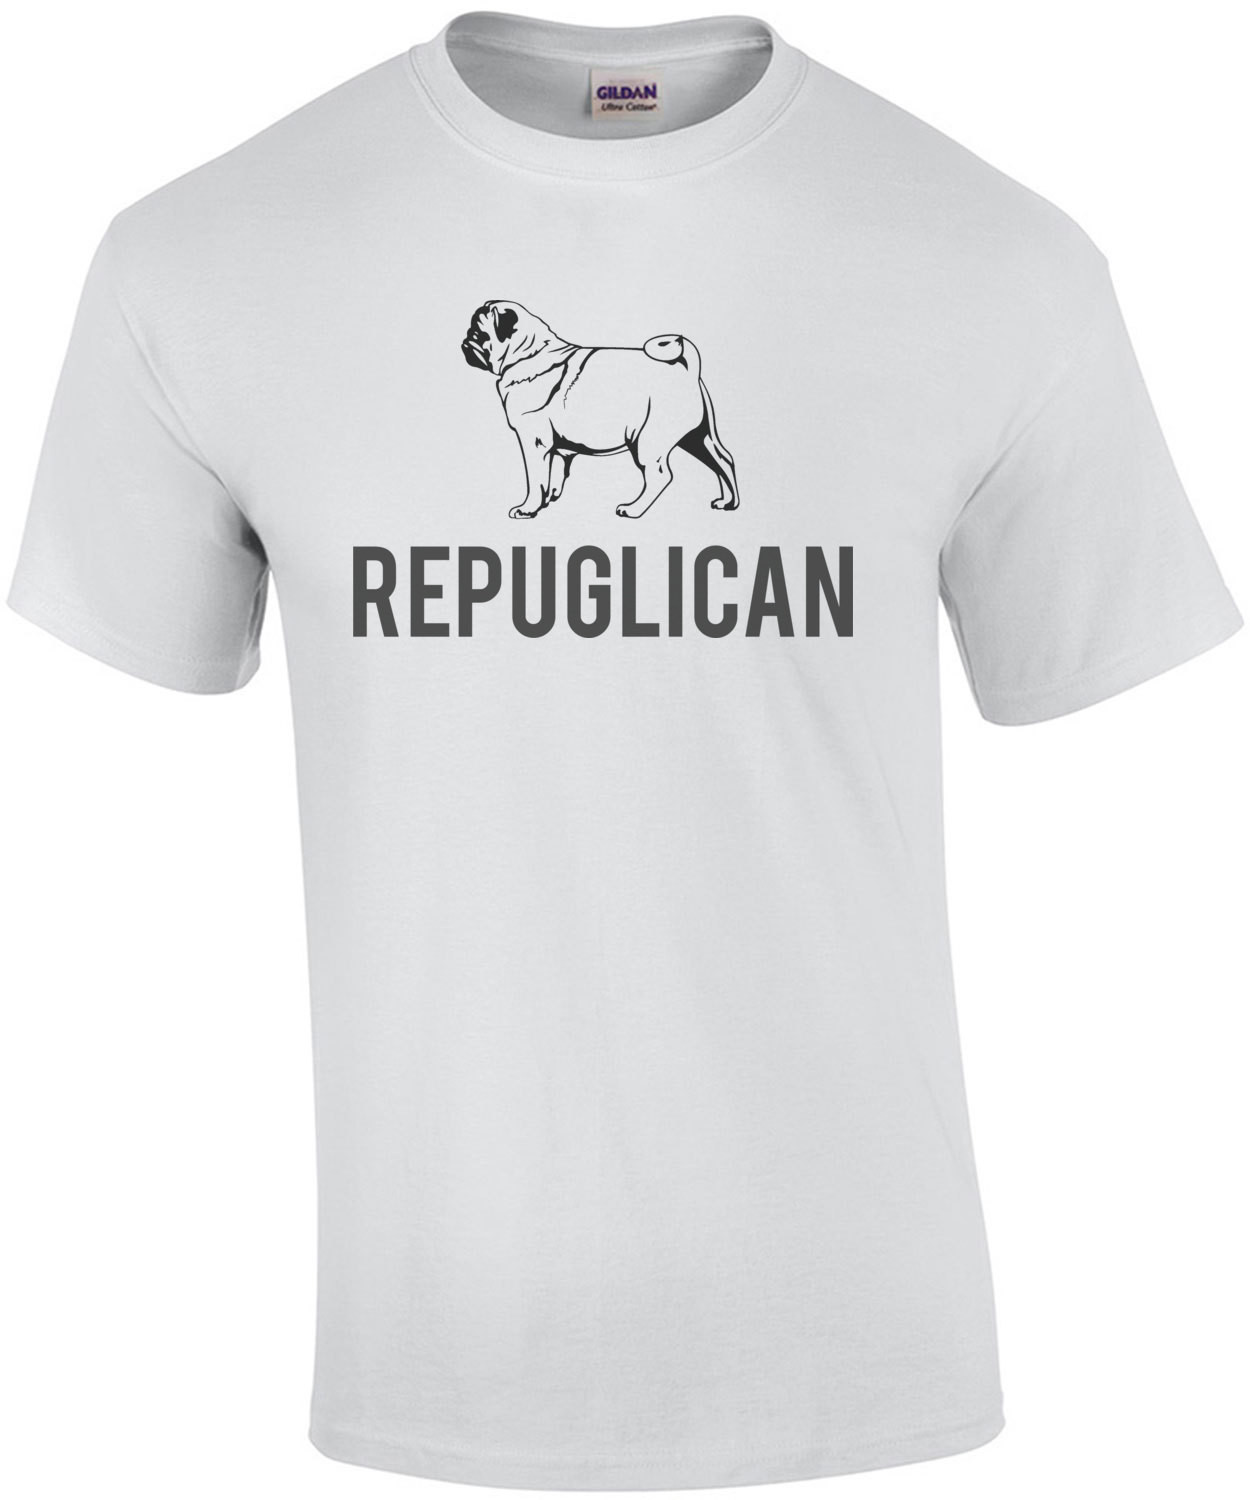 Repuglican T-Shirt